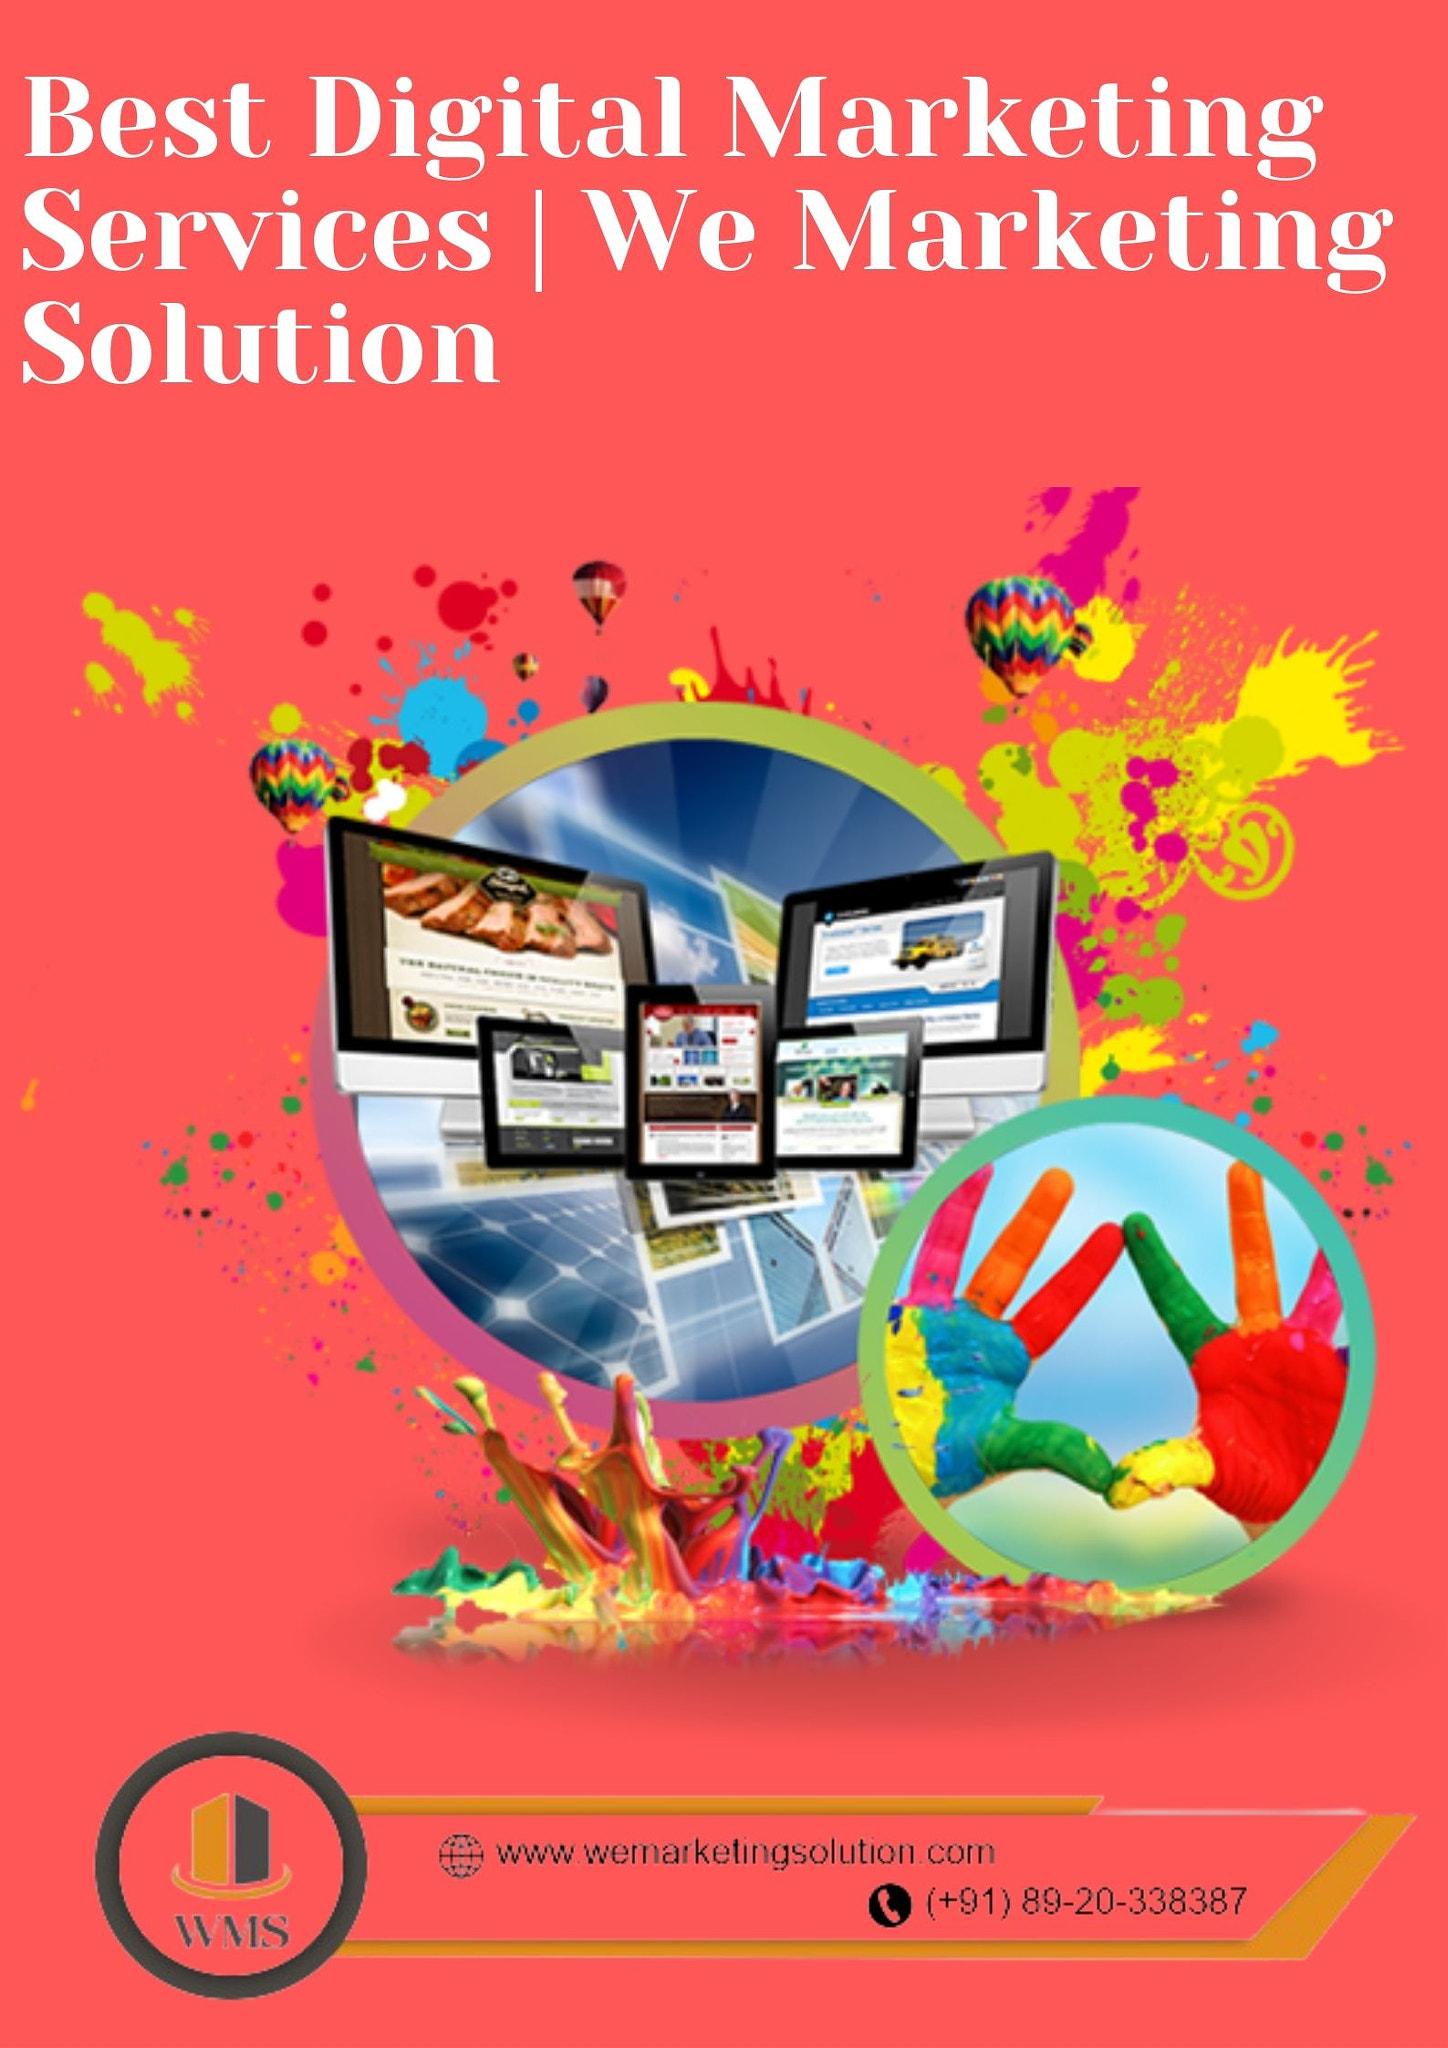 Internet Marketing Company | We Marketing Solution